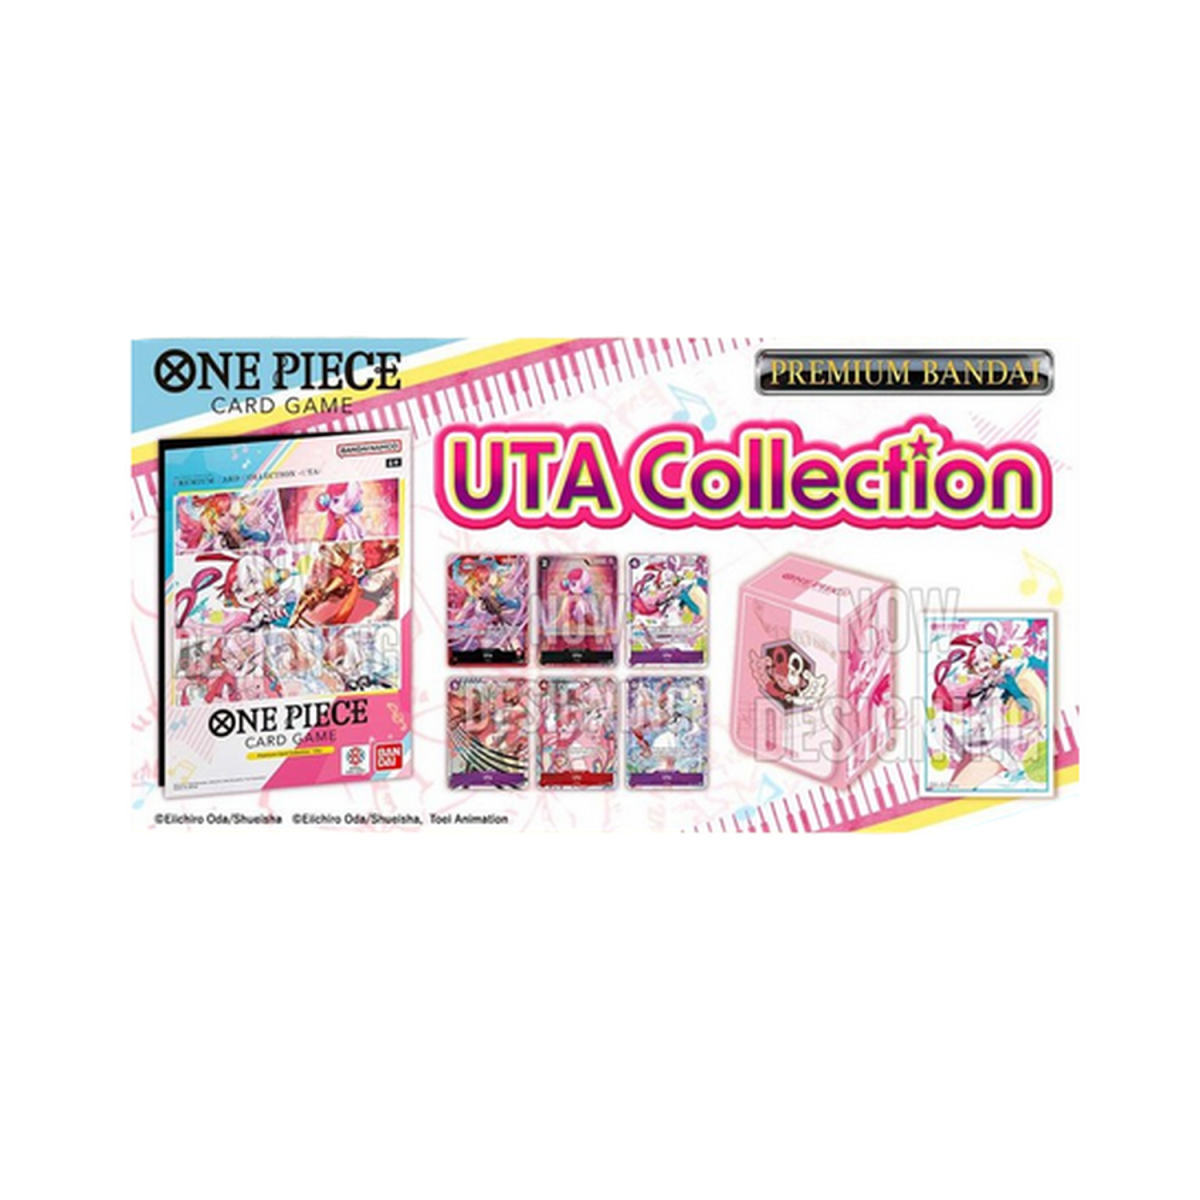 Item One Piece Card Game - Box Set - Uta Collection - English